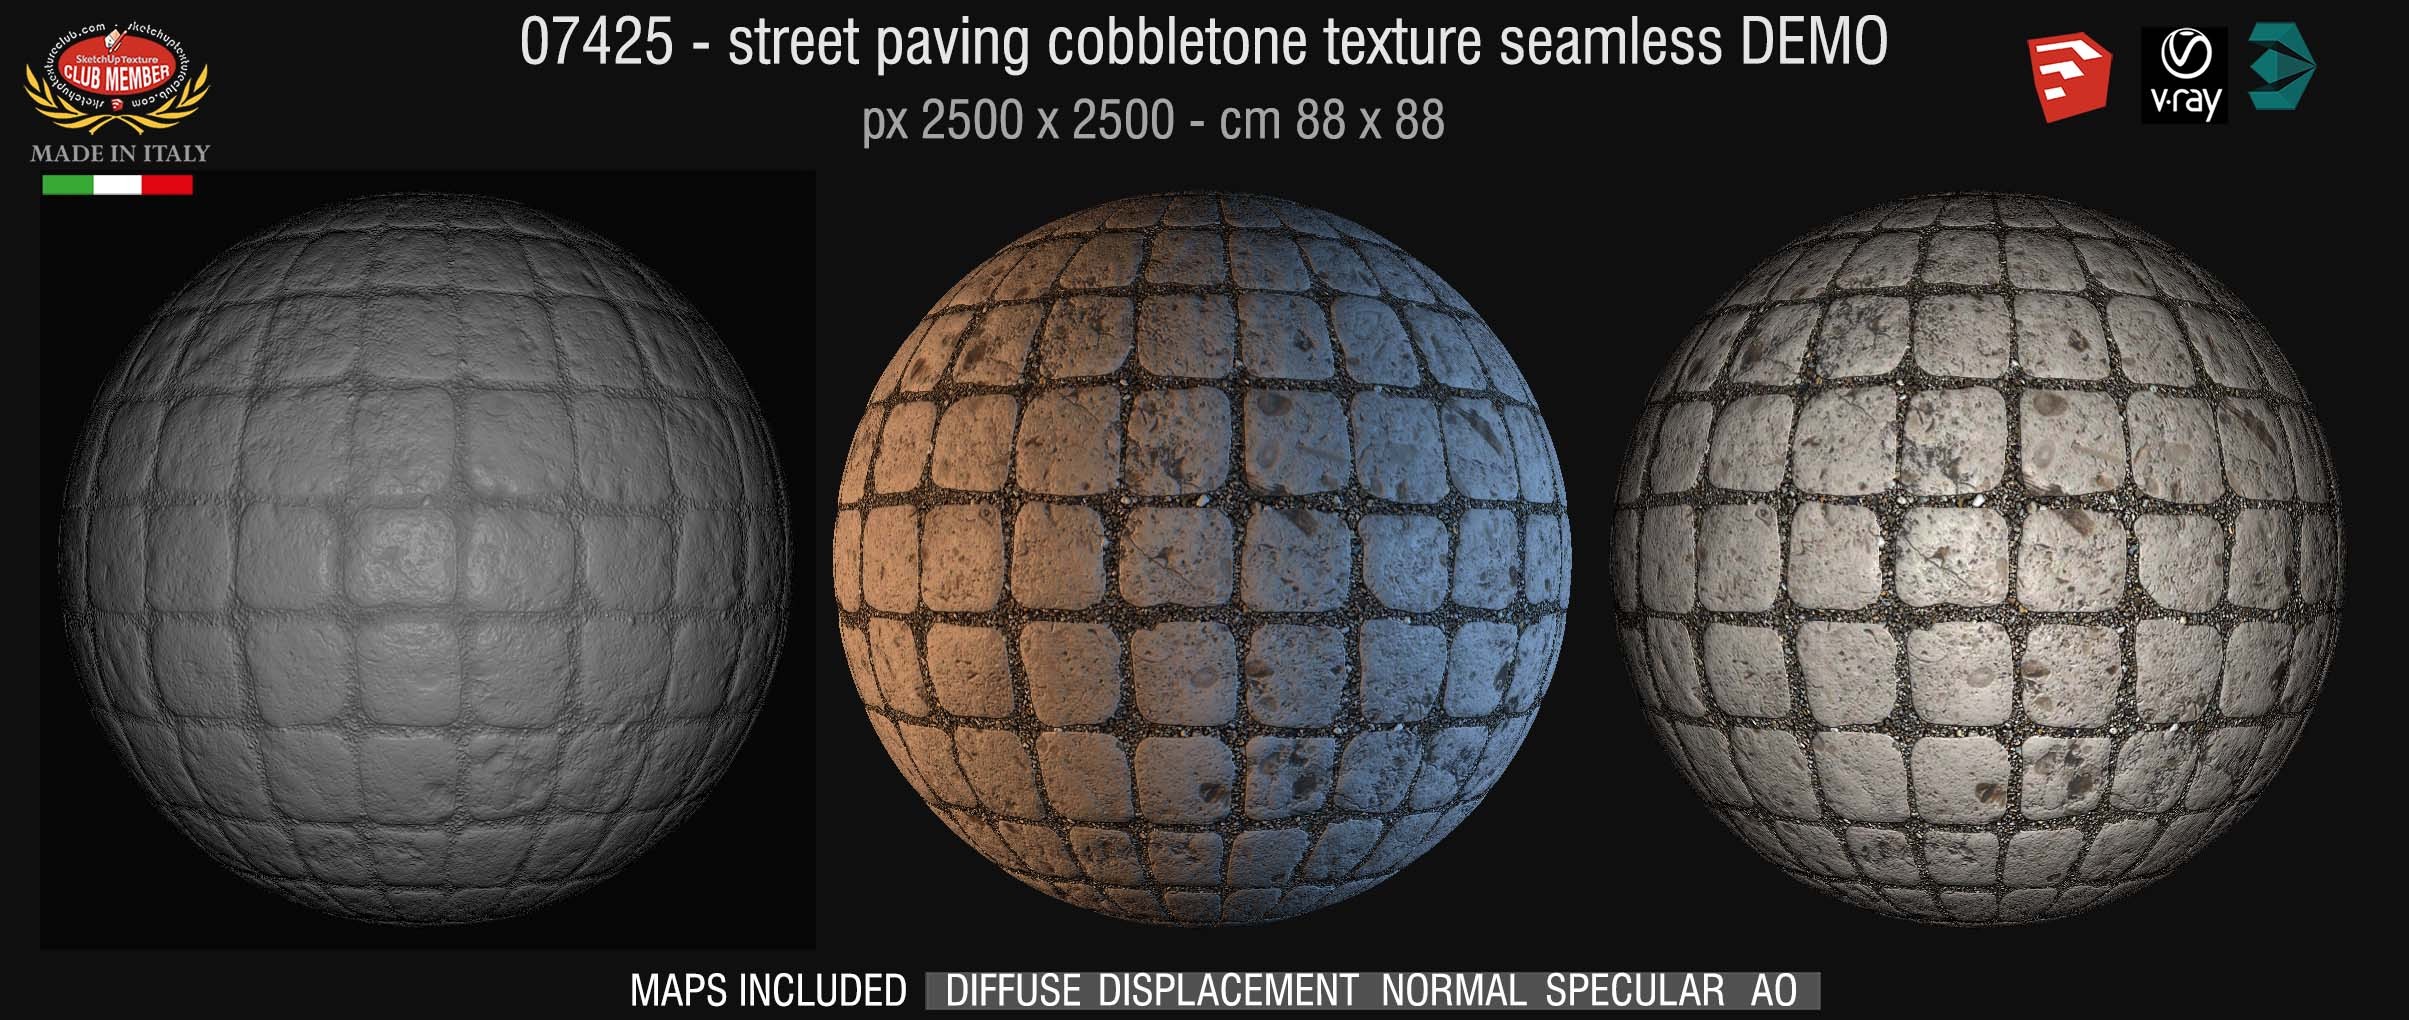 07425 HR Street paving cobblestone texture + maps DEMO